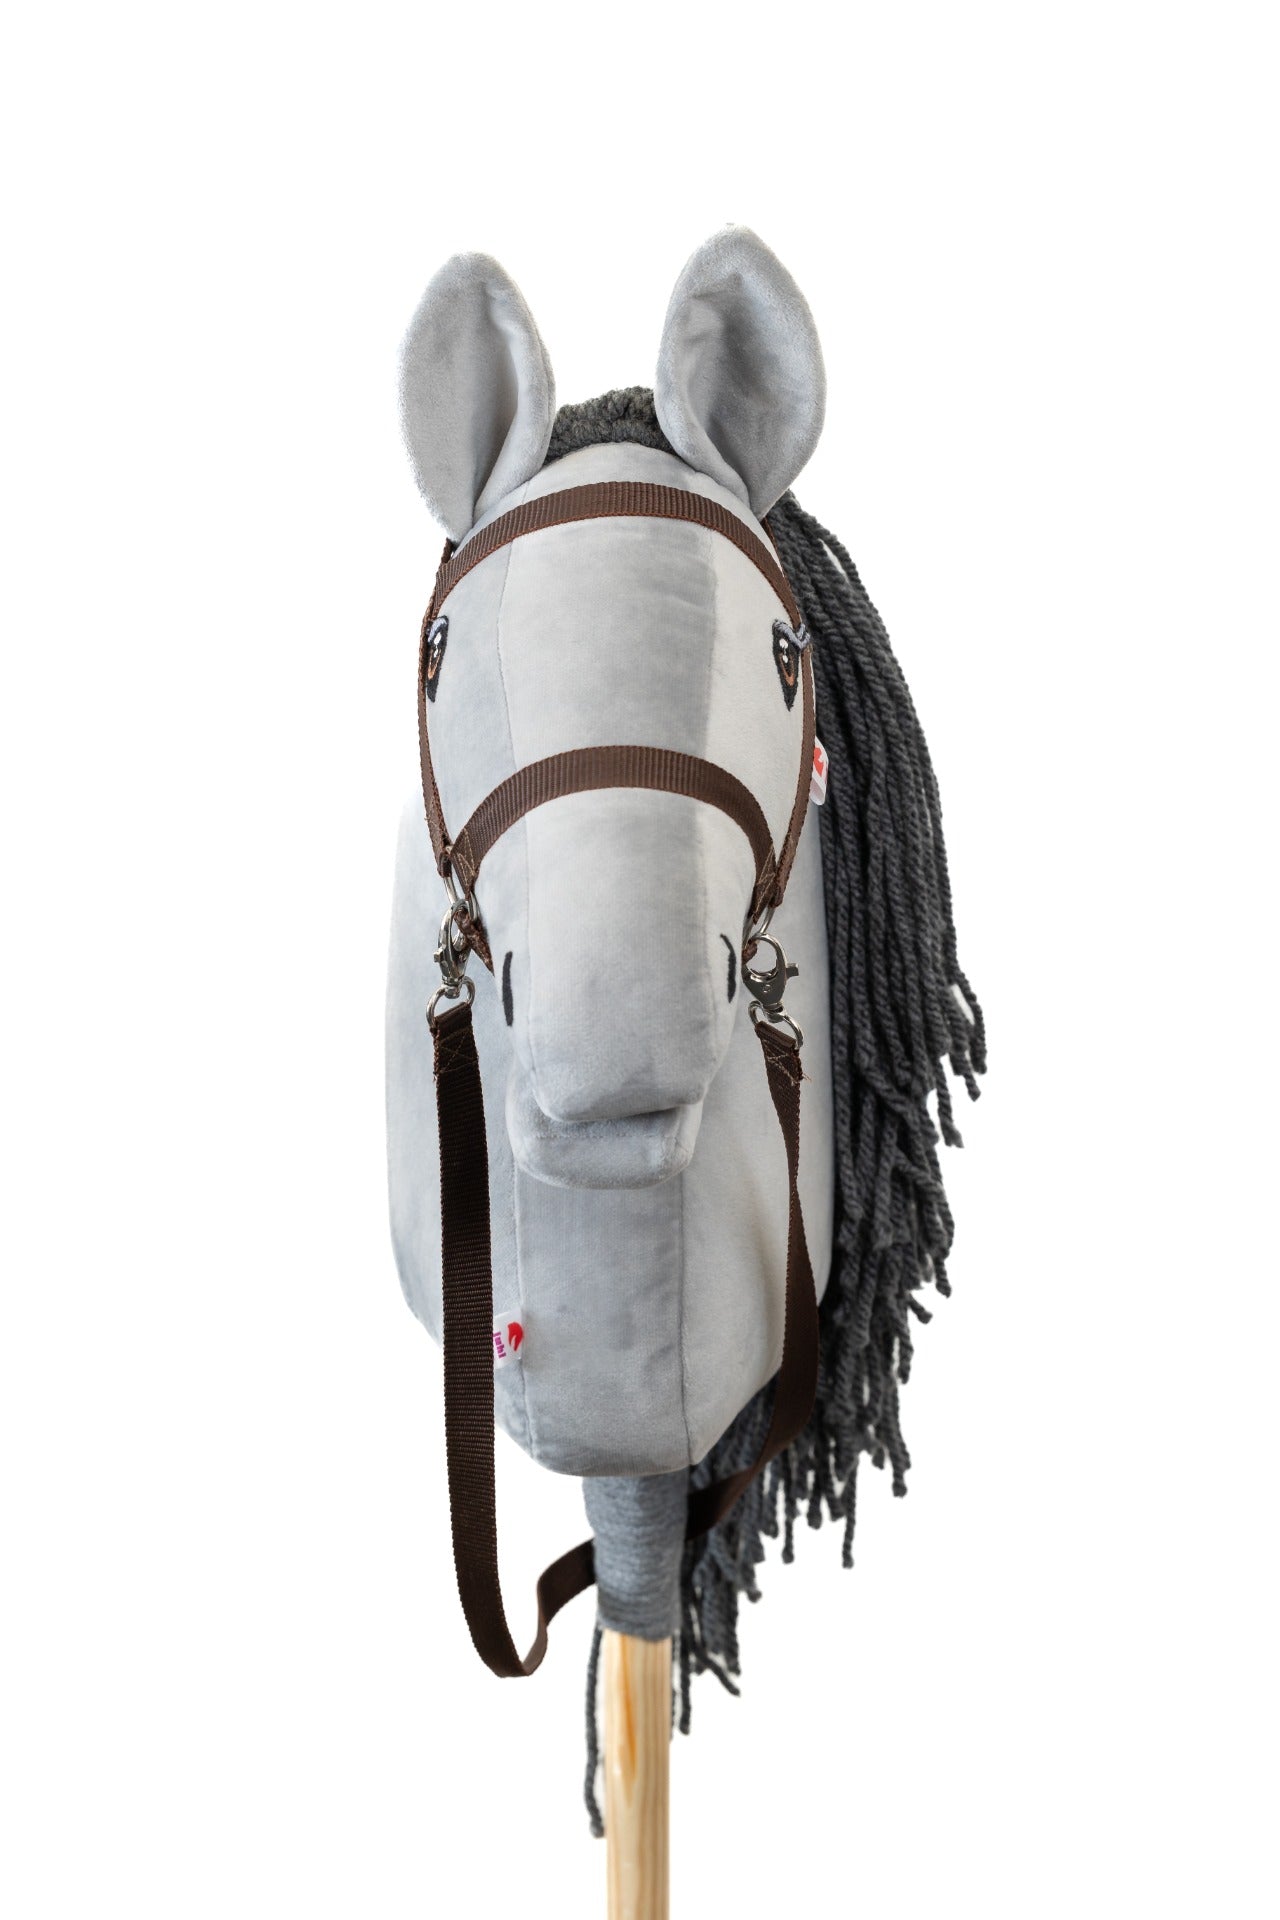 Silver - Grey mane - Adult horse